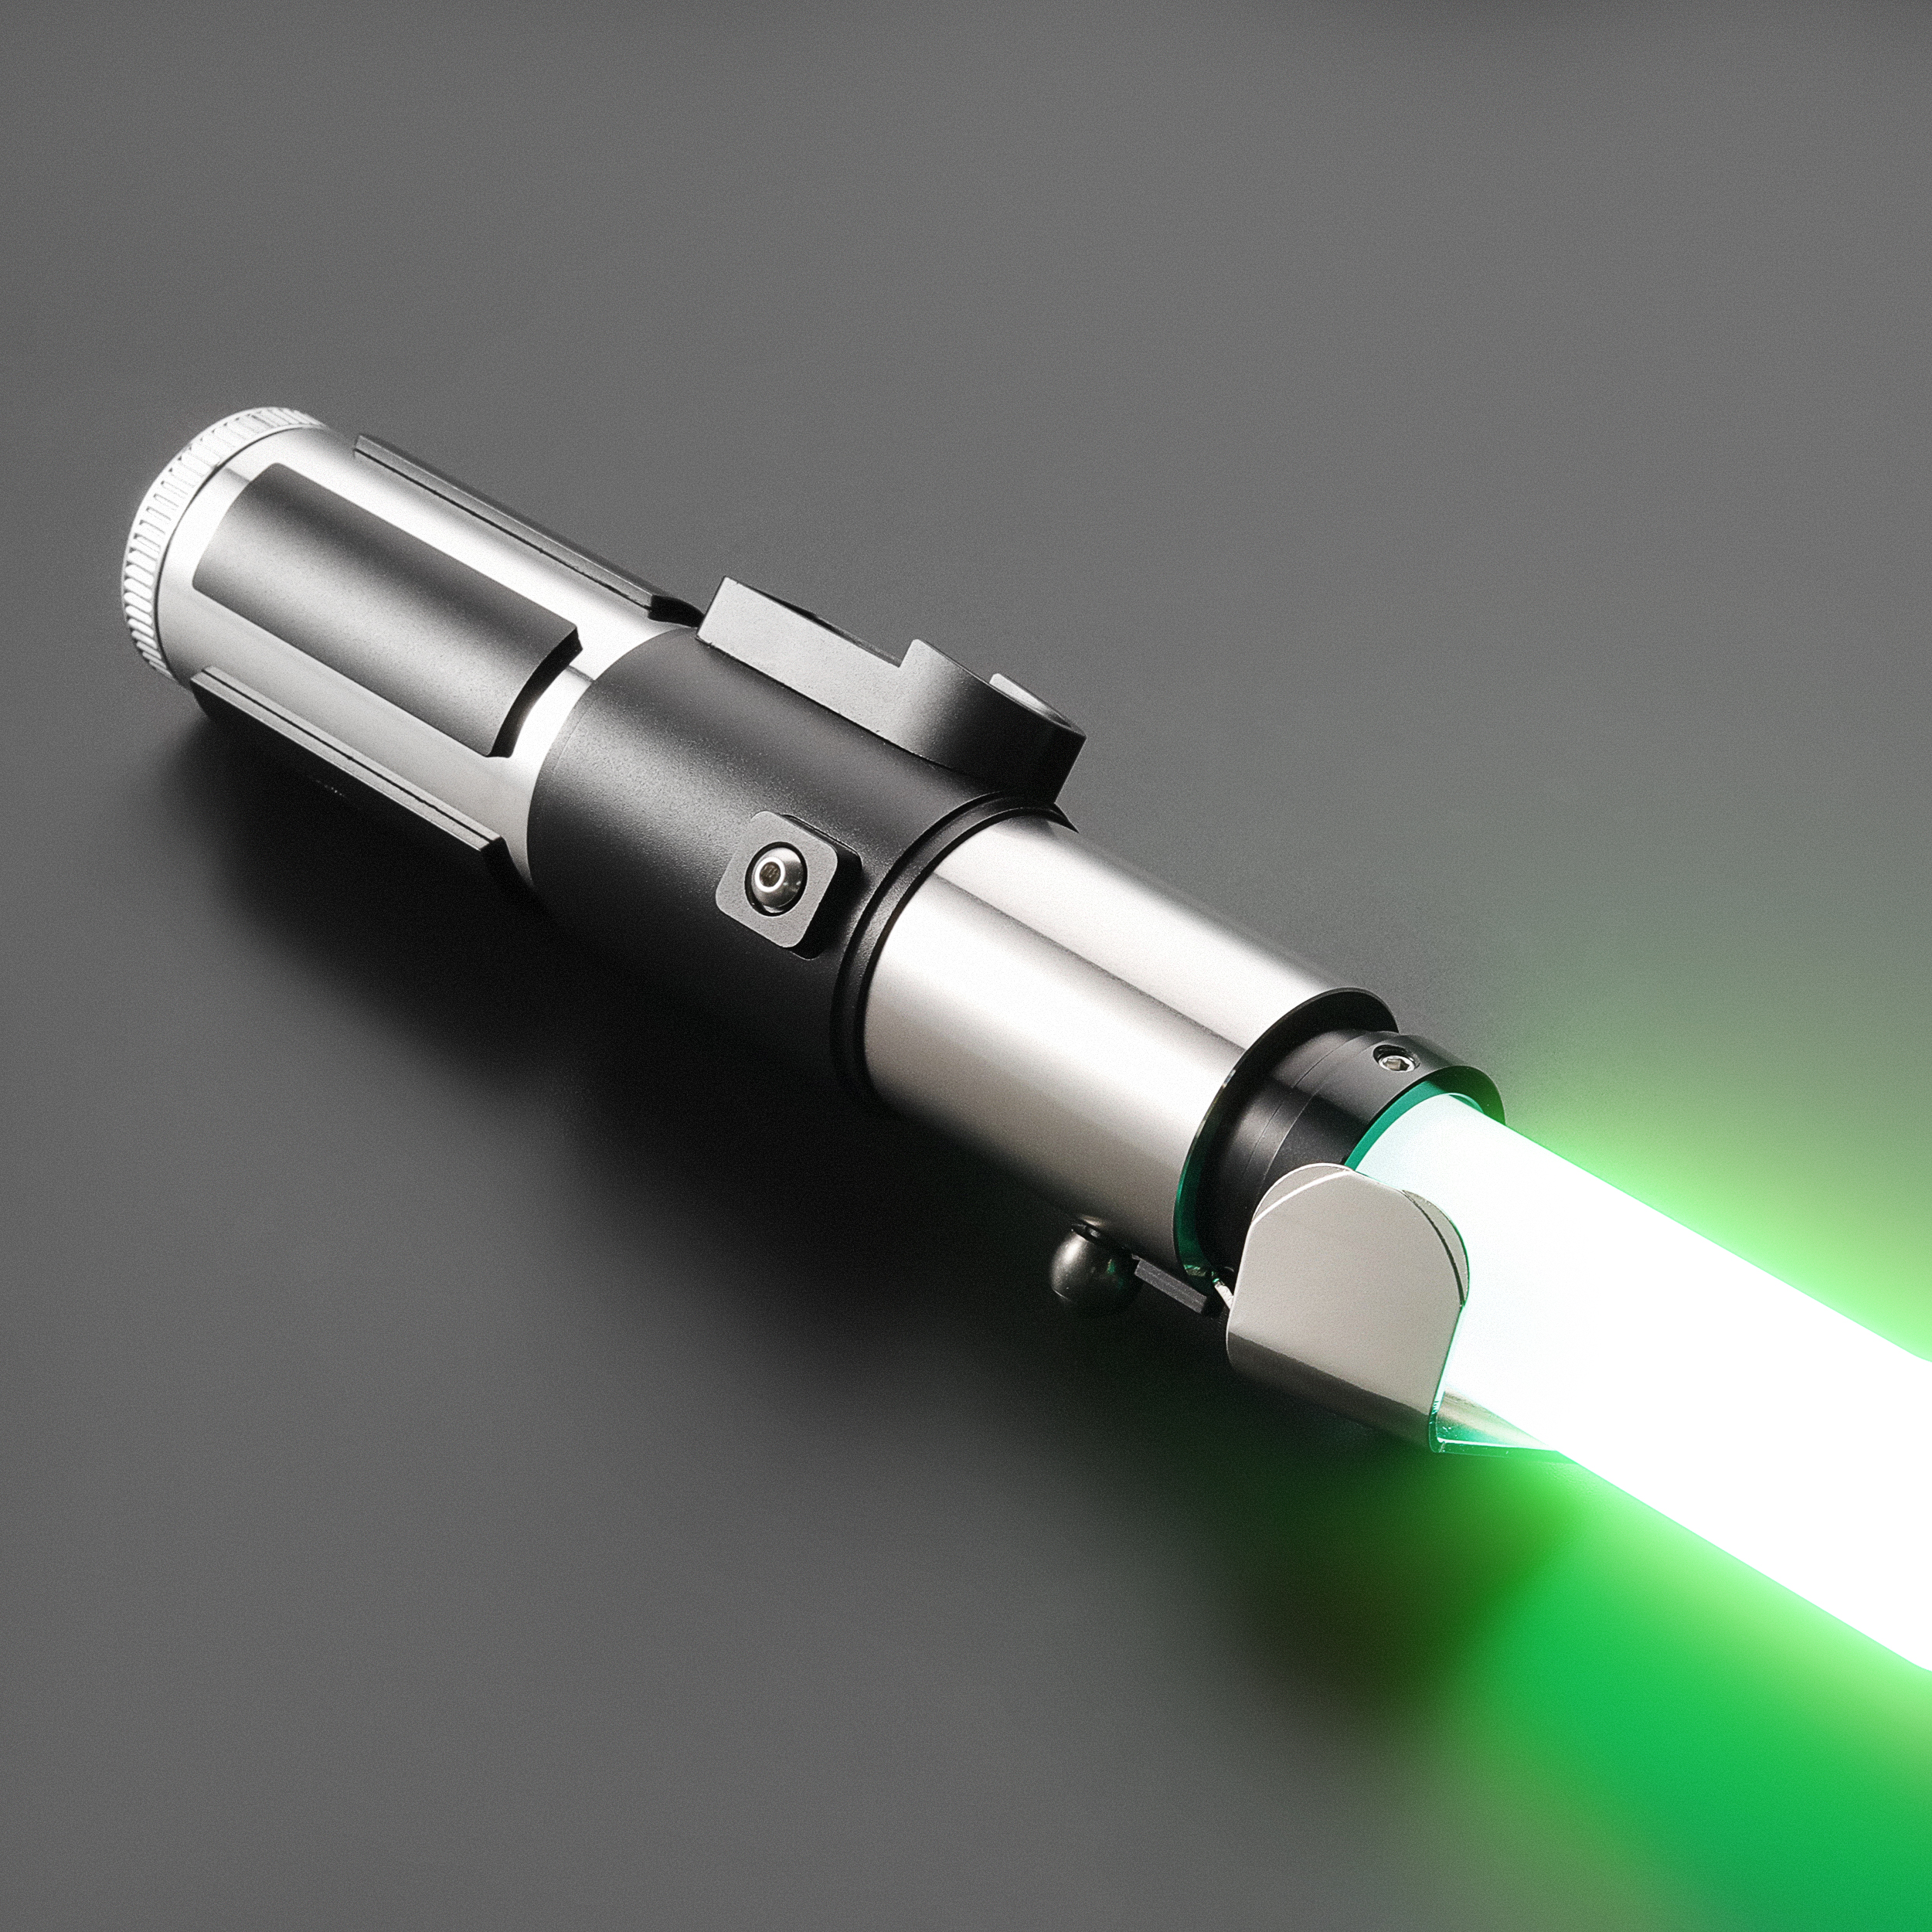 SL-YOD - J'peux pas j'ai sabre laser